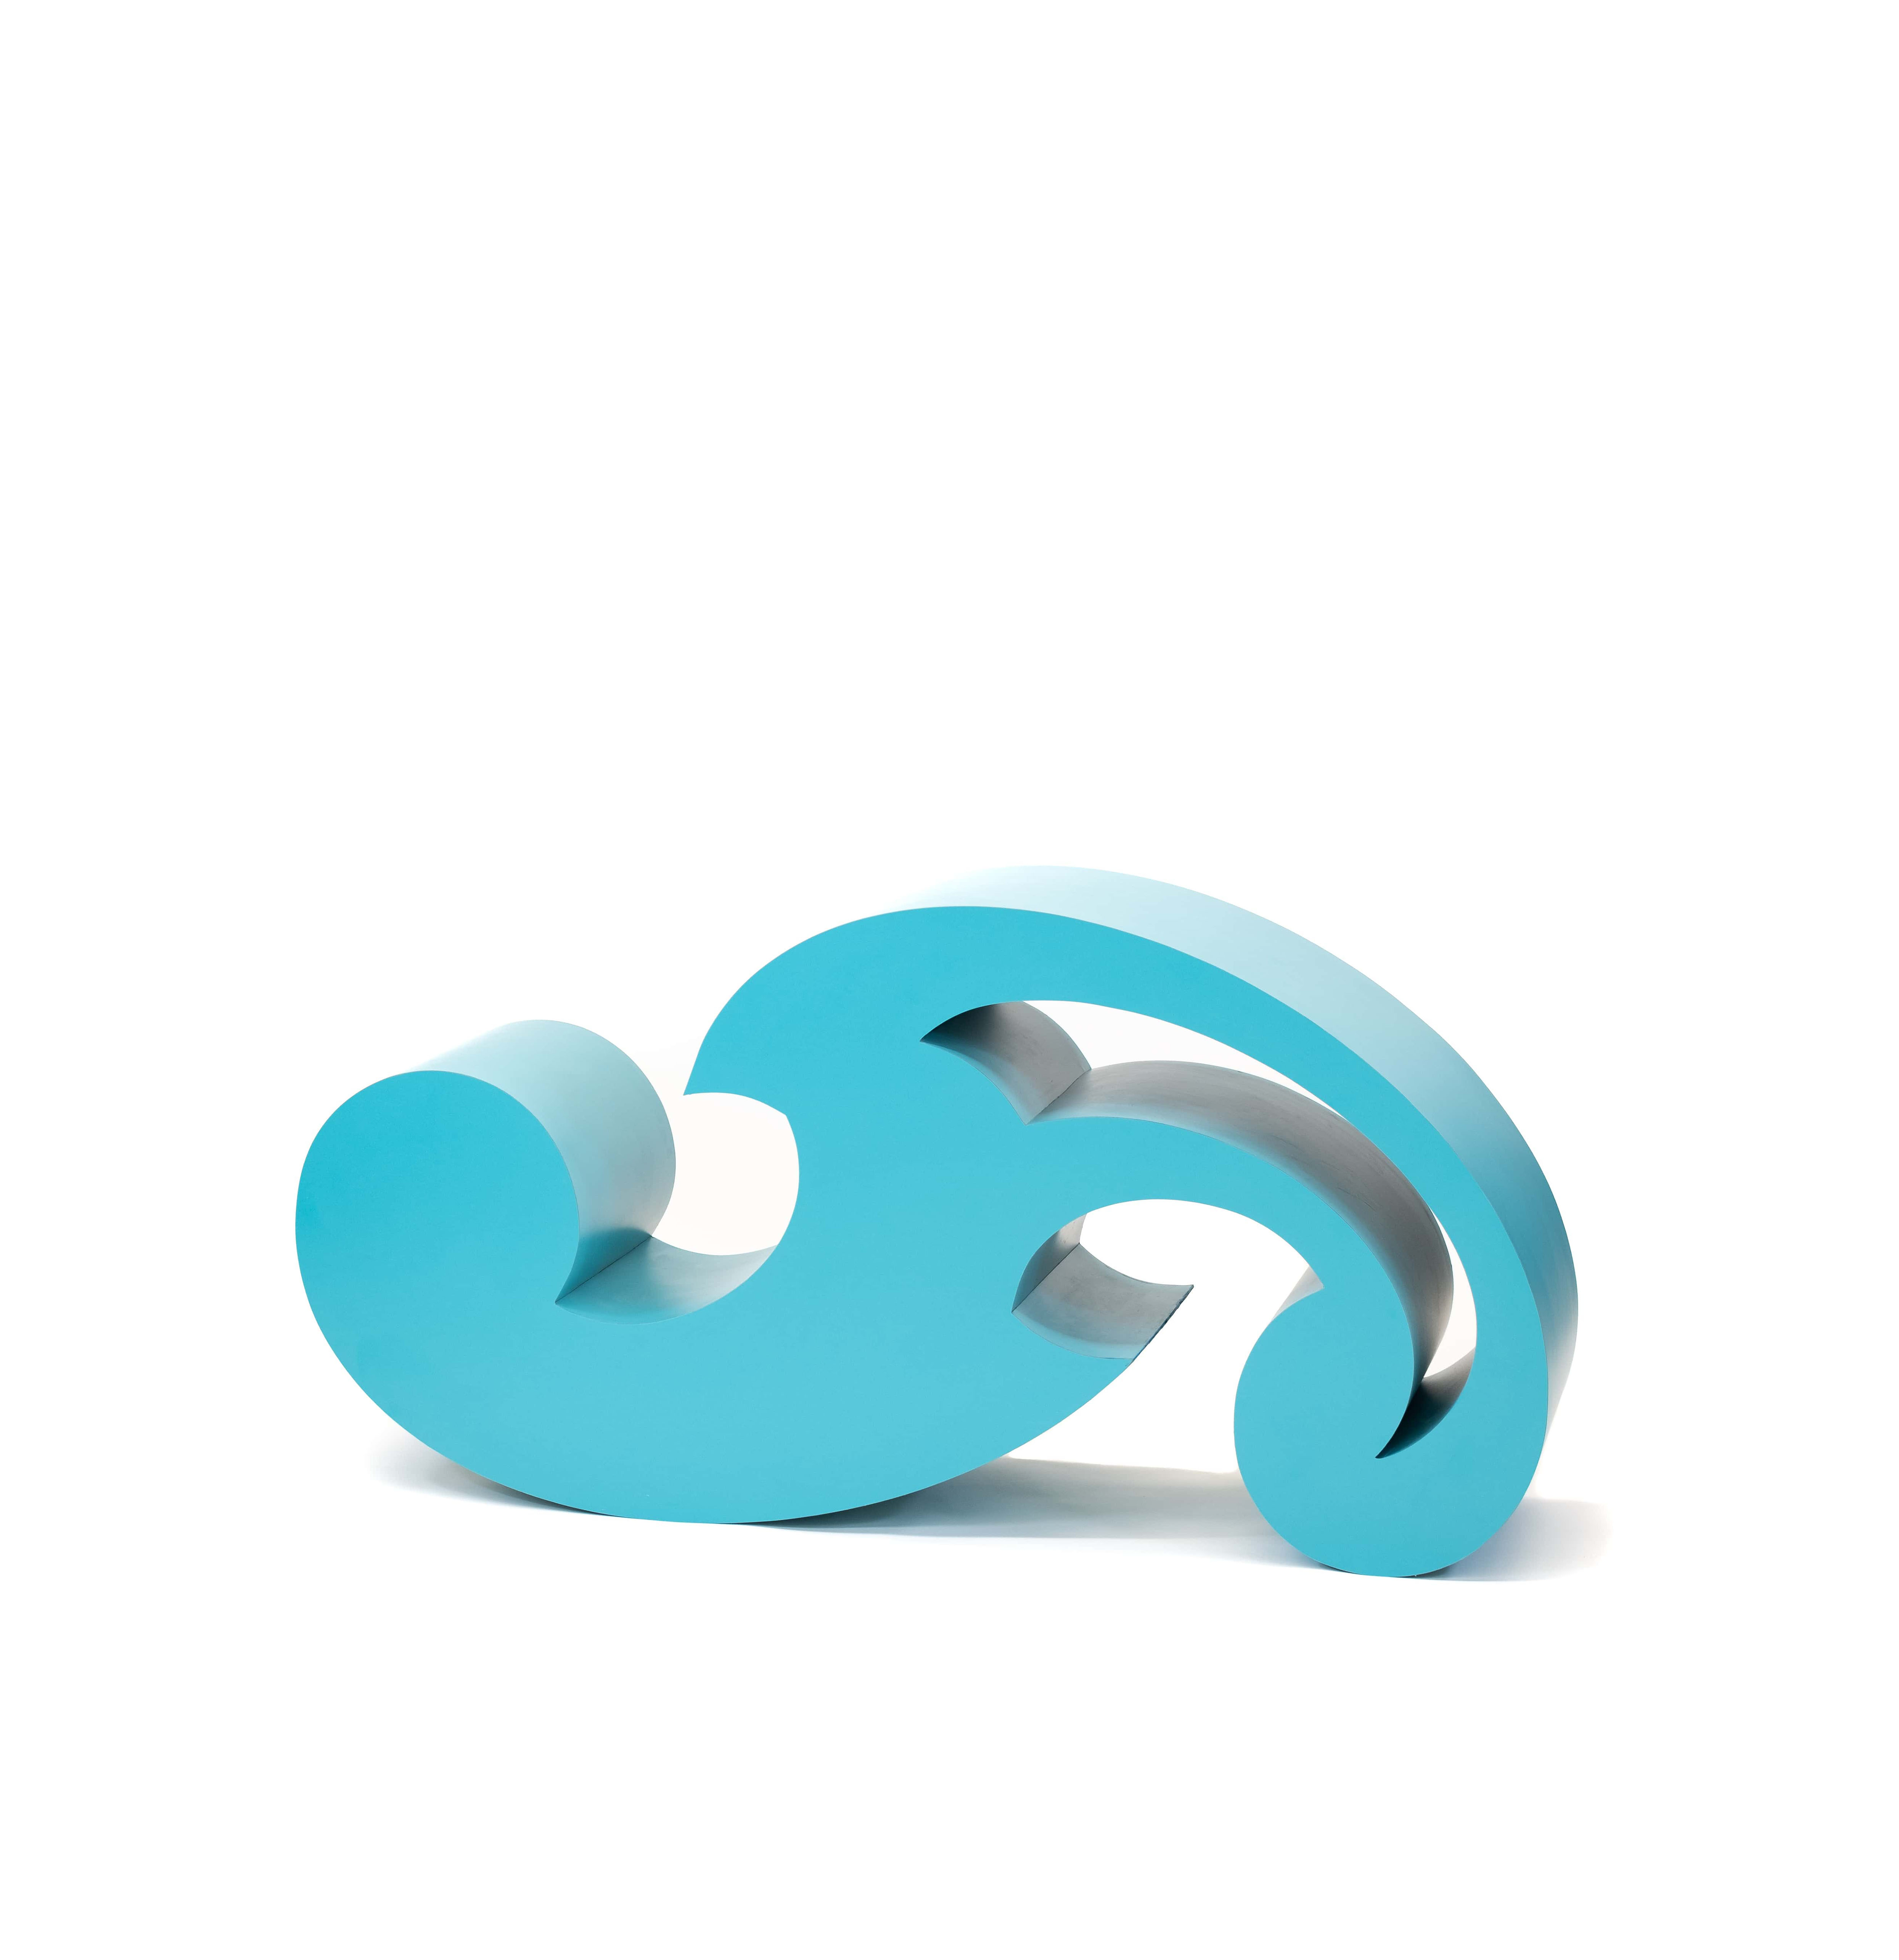 A 3D, curved, blue form, resembling a particular design motif.